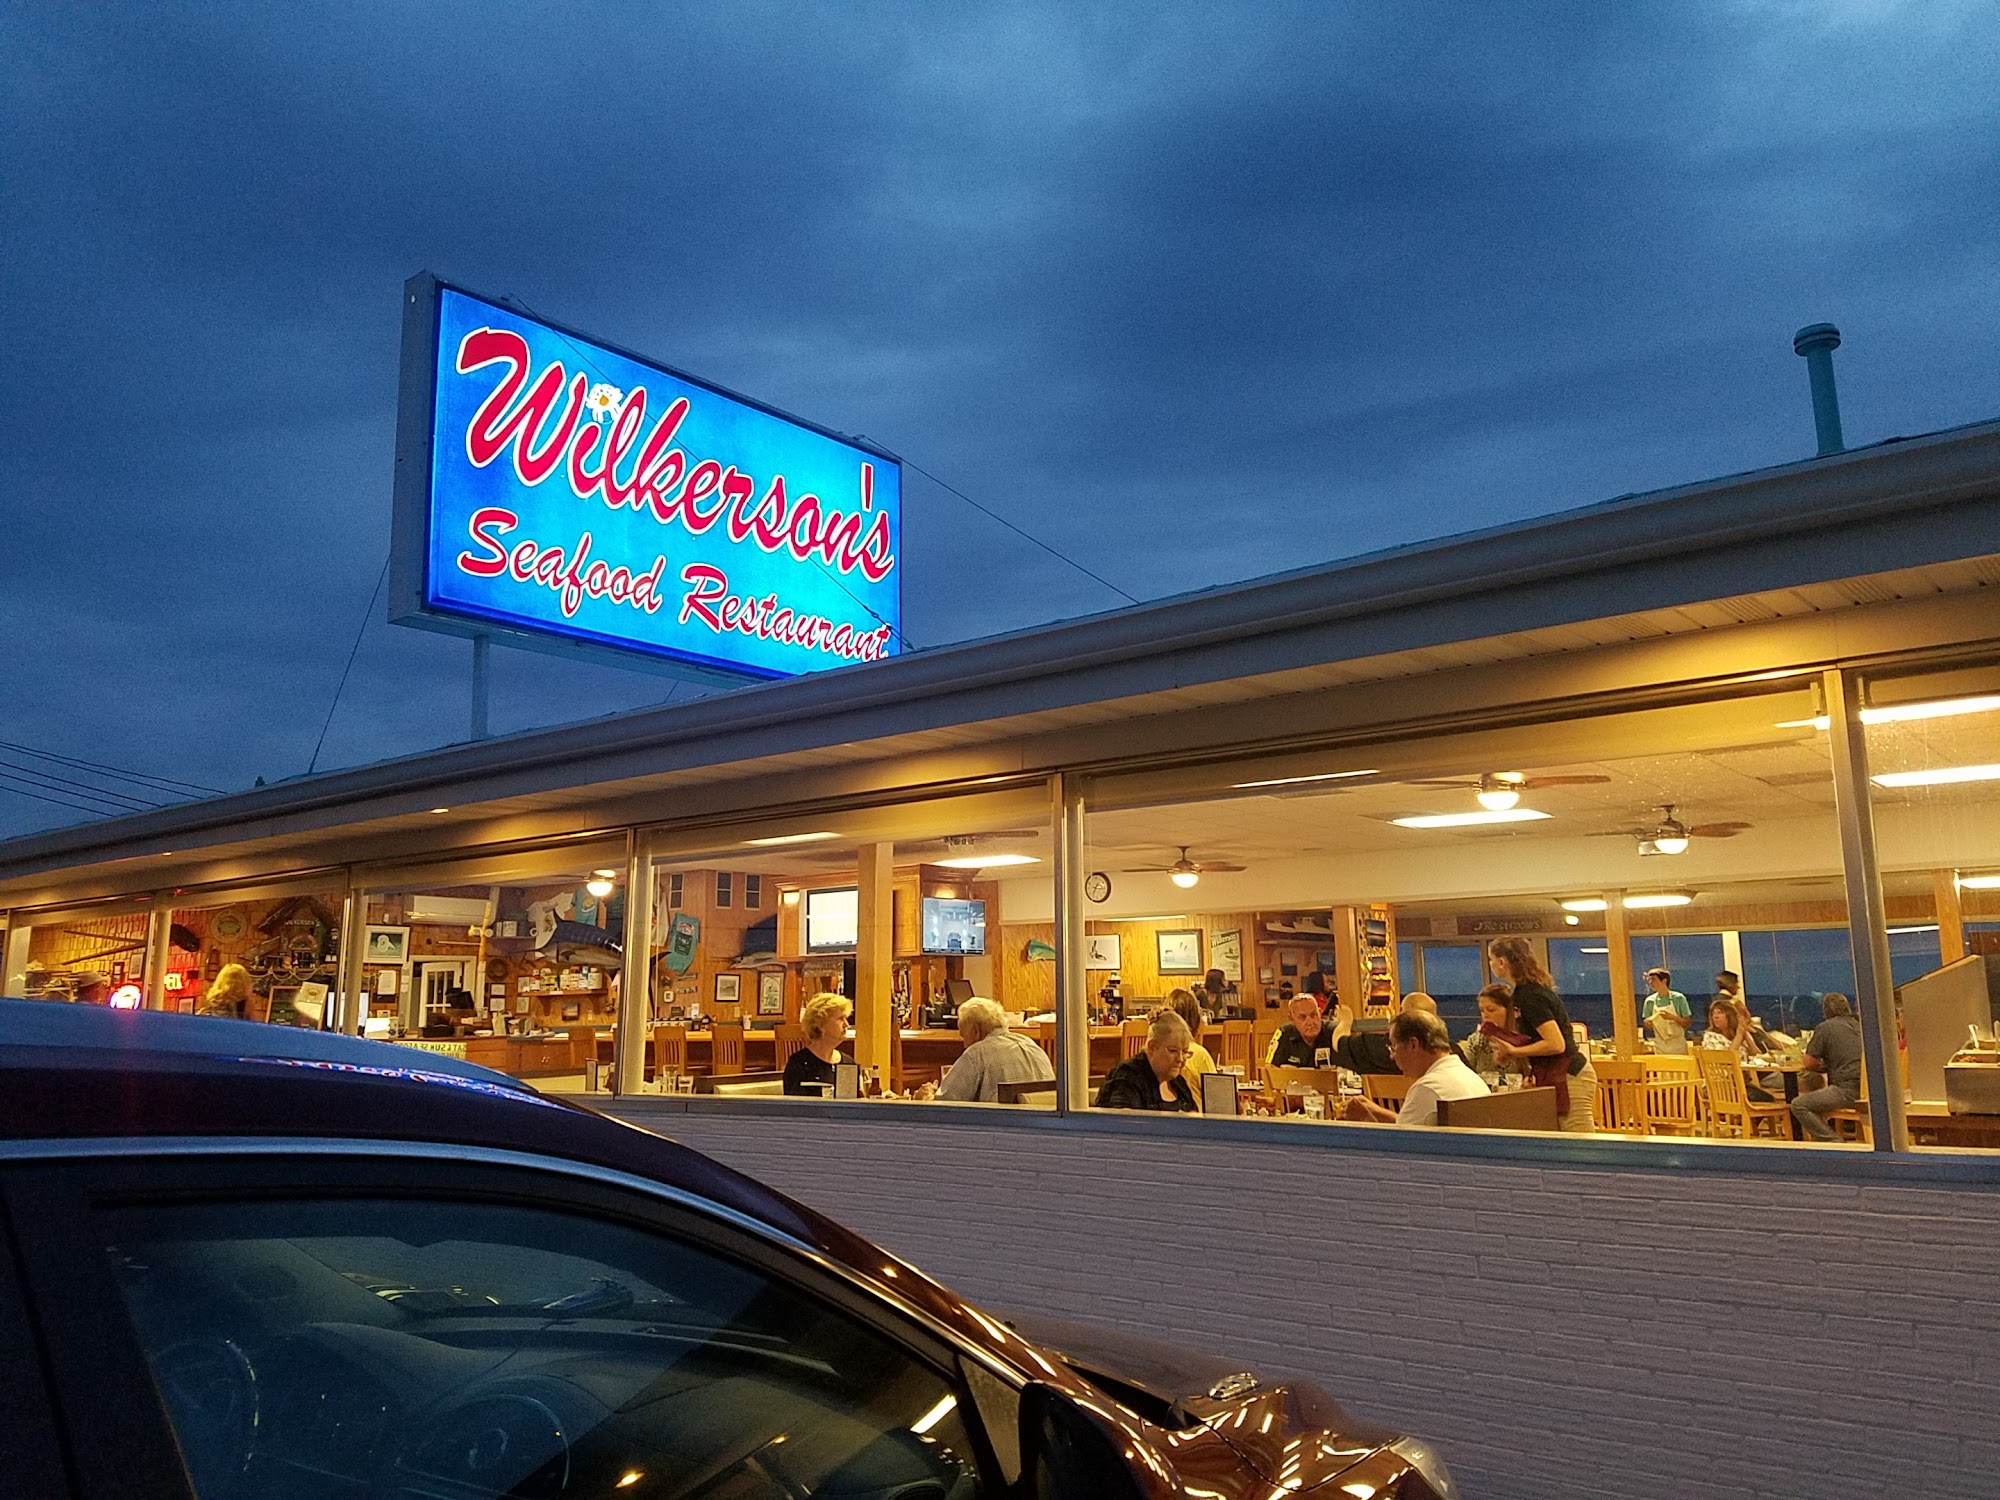 Wilkerson's Seafood Restaurant